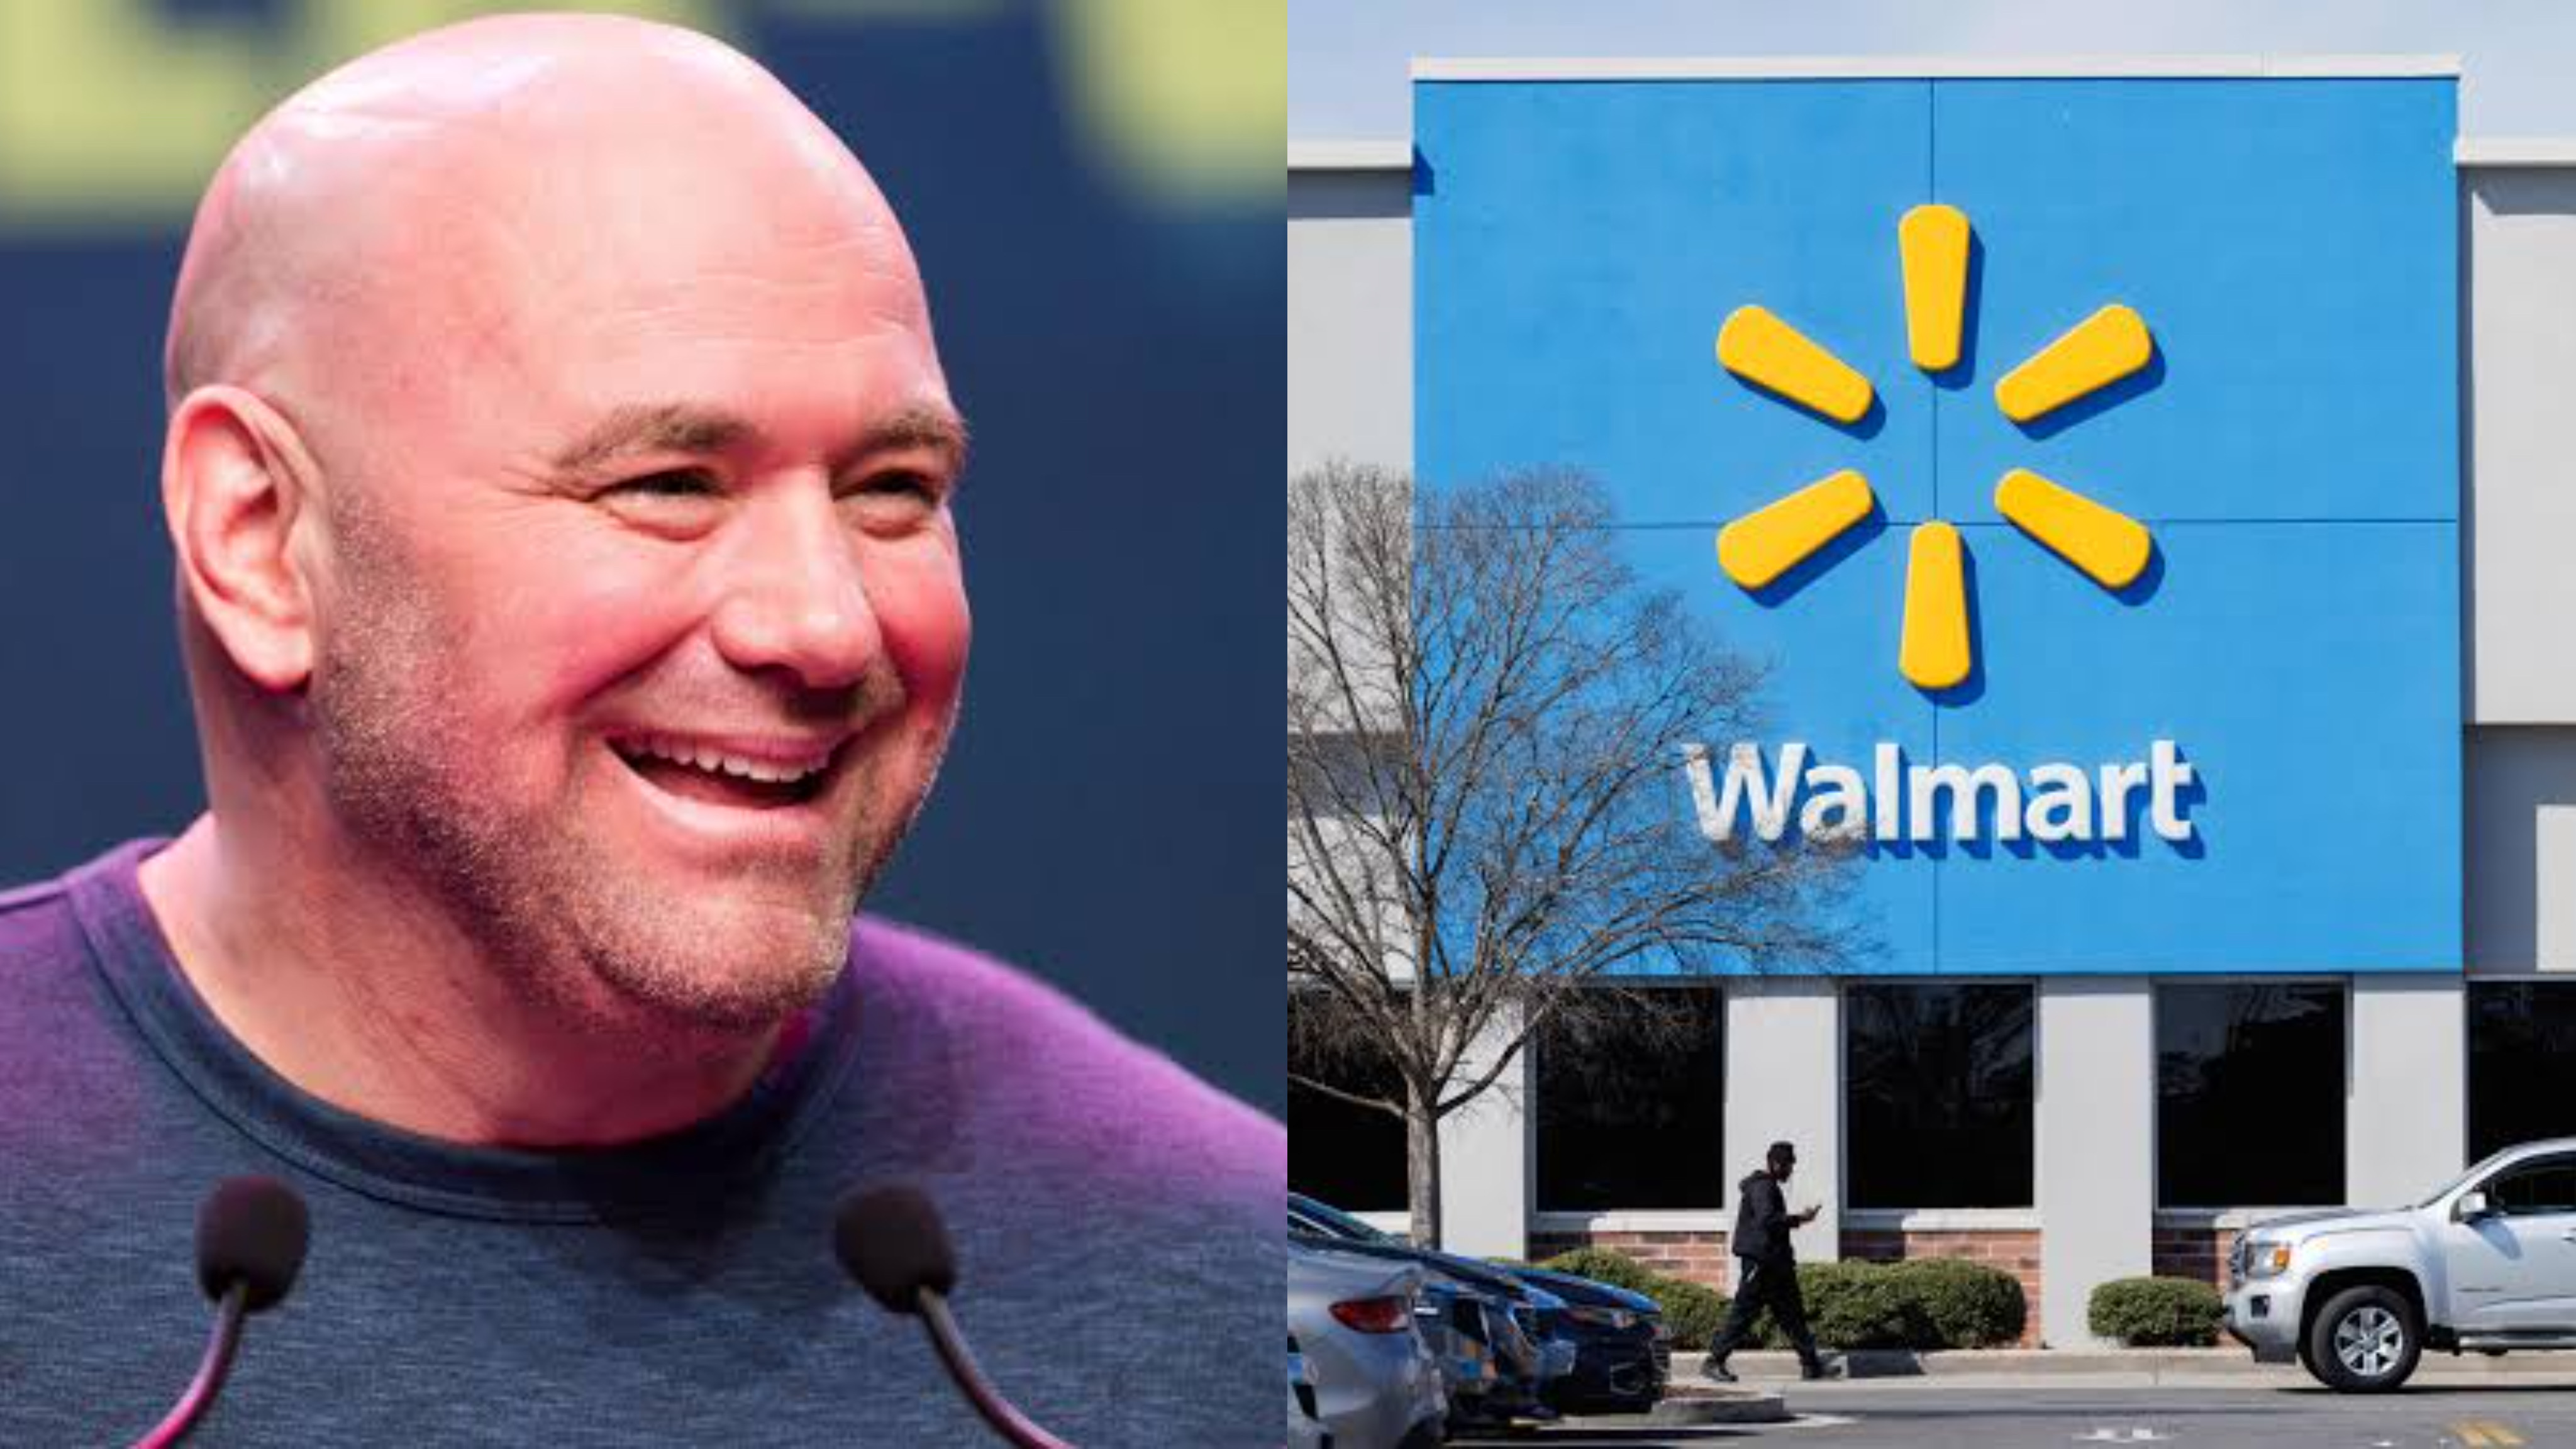 UFC President Dana White Reveals Working On Major Deal With Walmart